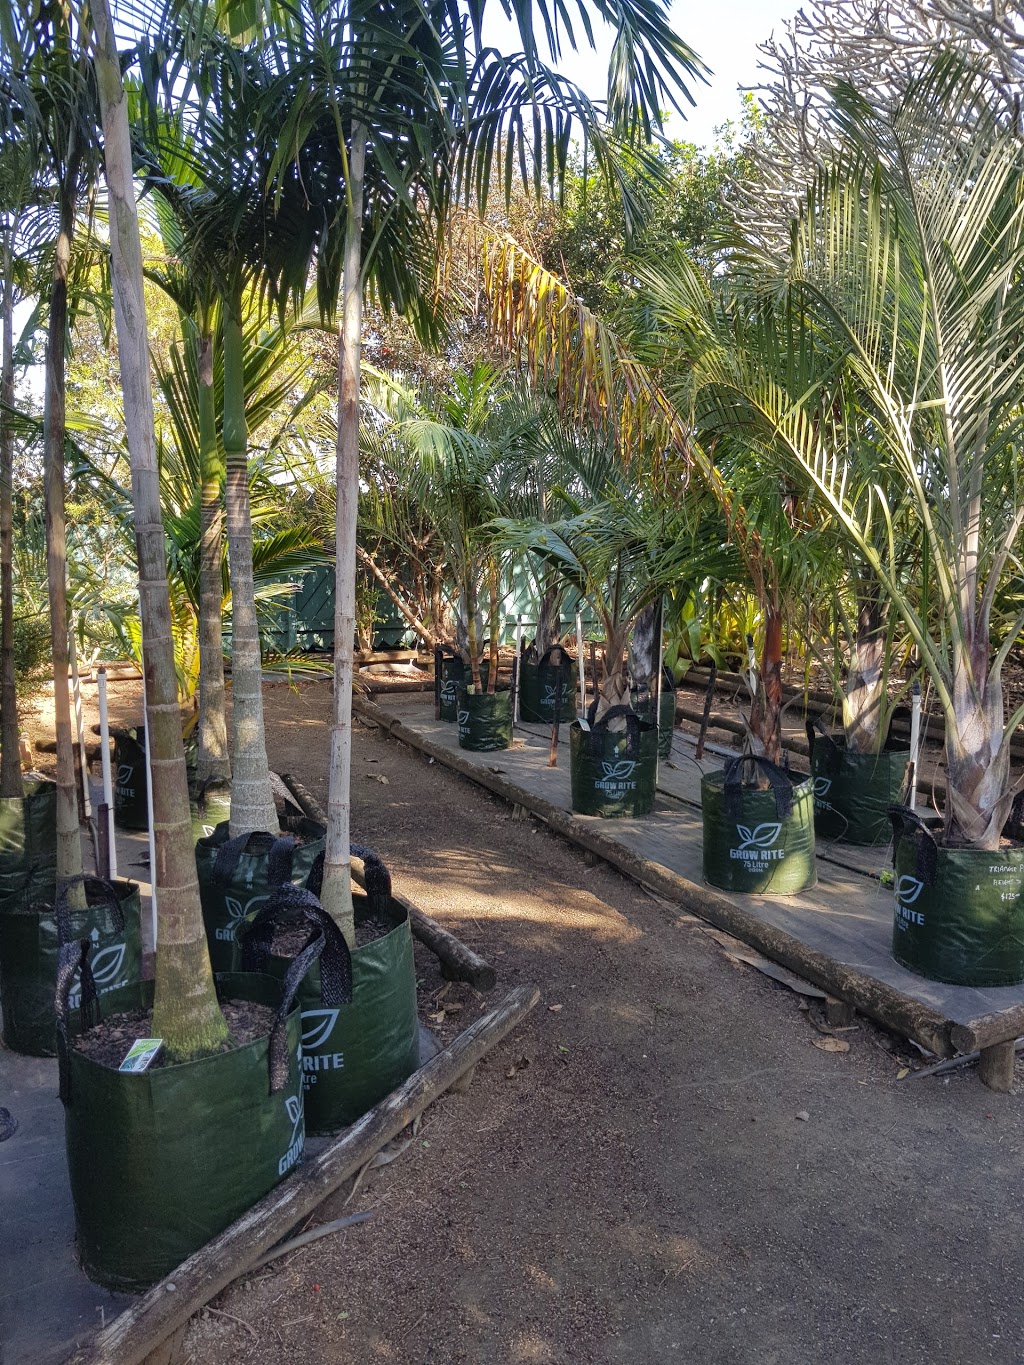 Tropical Paradise Nursery |  | 67 Bells Rd, Woongarra QLD 4670, Australia | 0741518036 OR +61 7 4151 8036